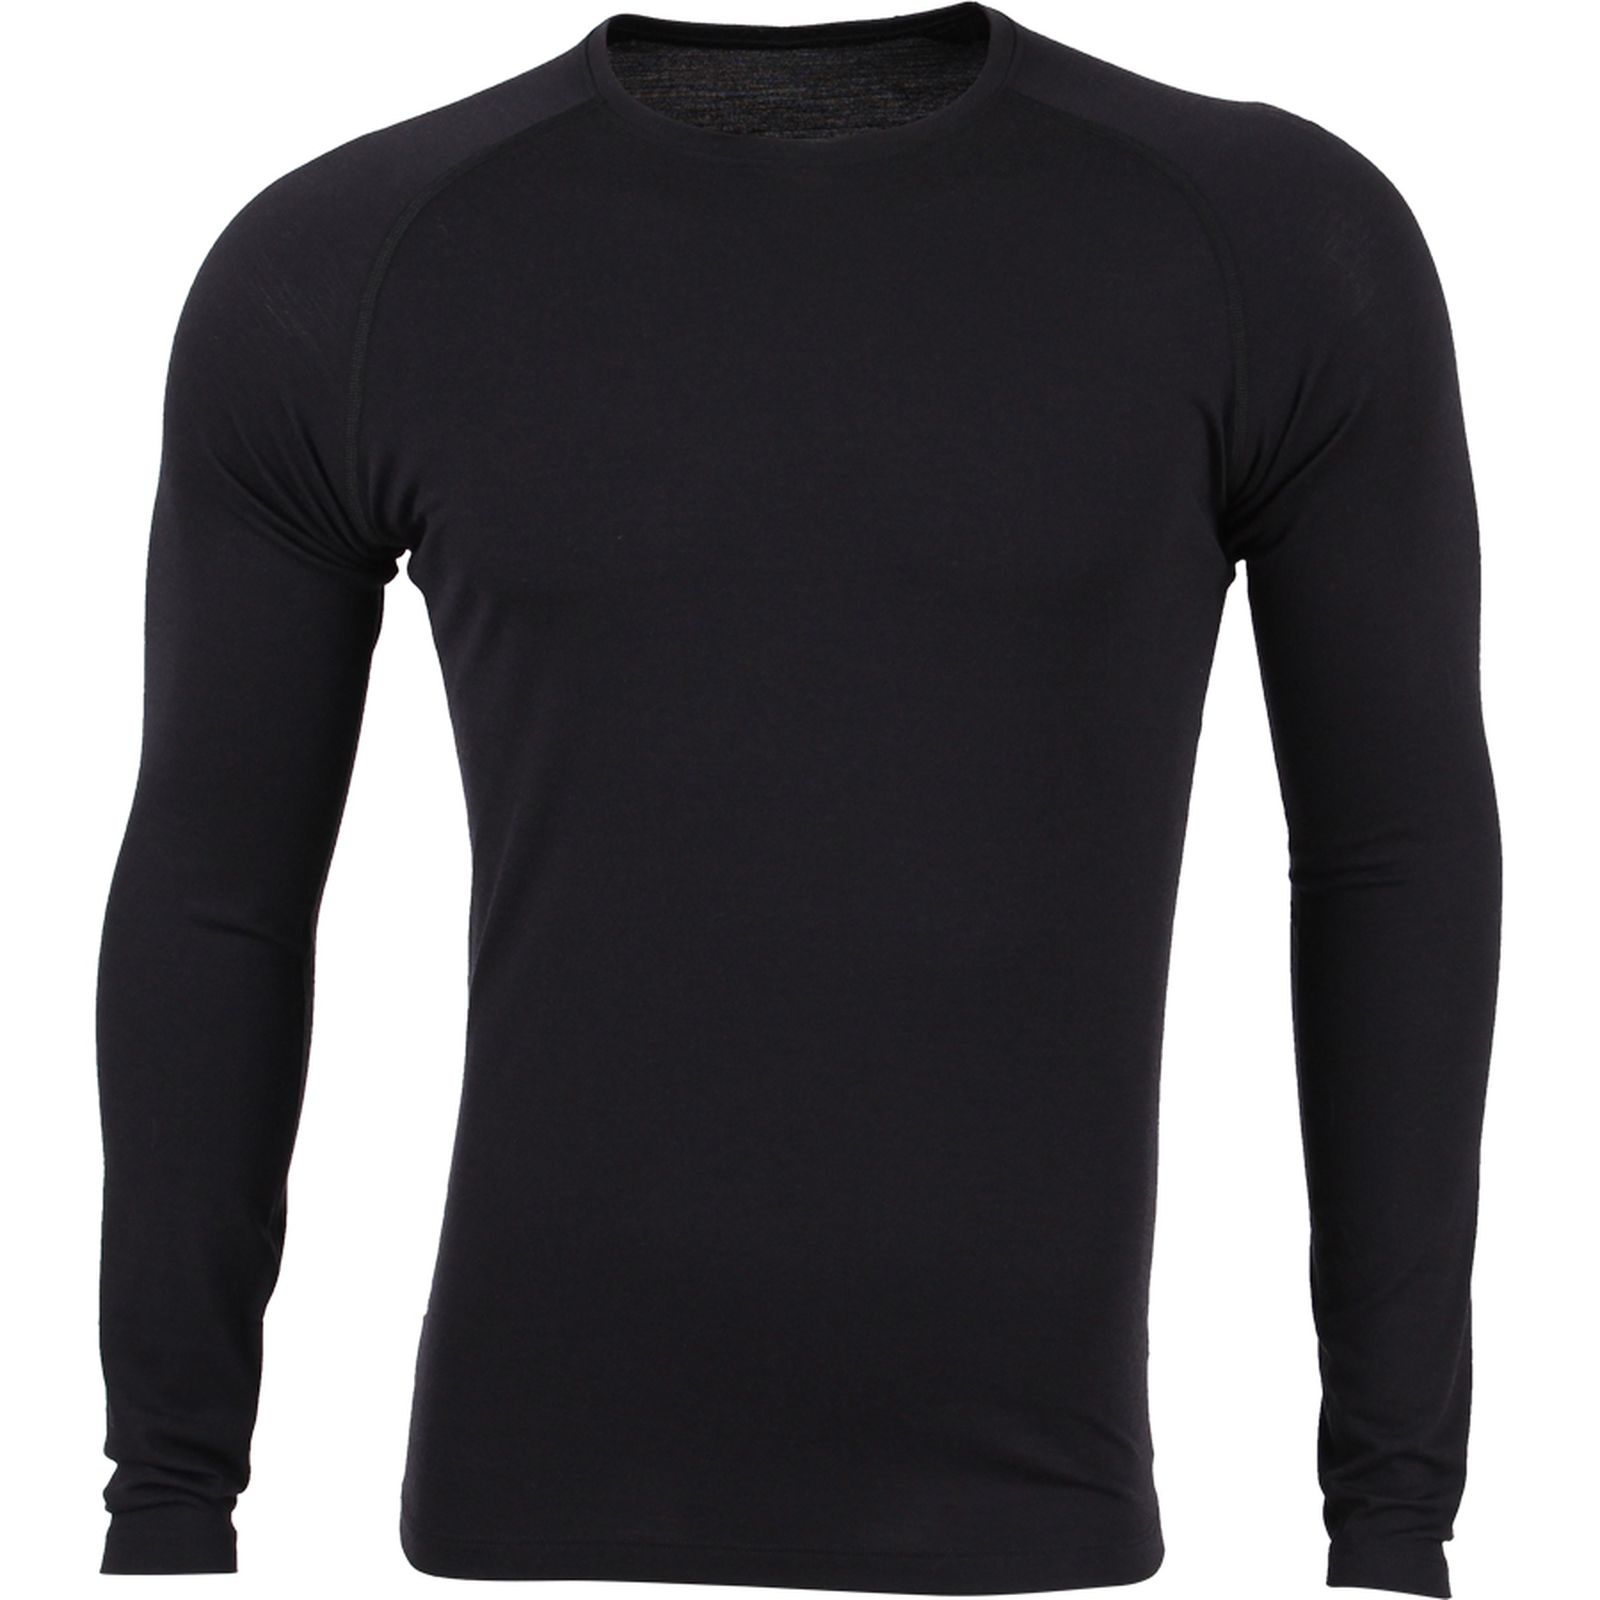 Термобелье футболка L/S Splav «Comfort» мод. 2 Merino wool (чёрный,42/164). Скидка 330 руб.